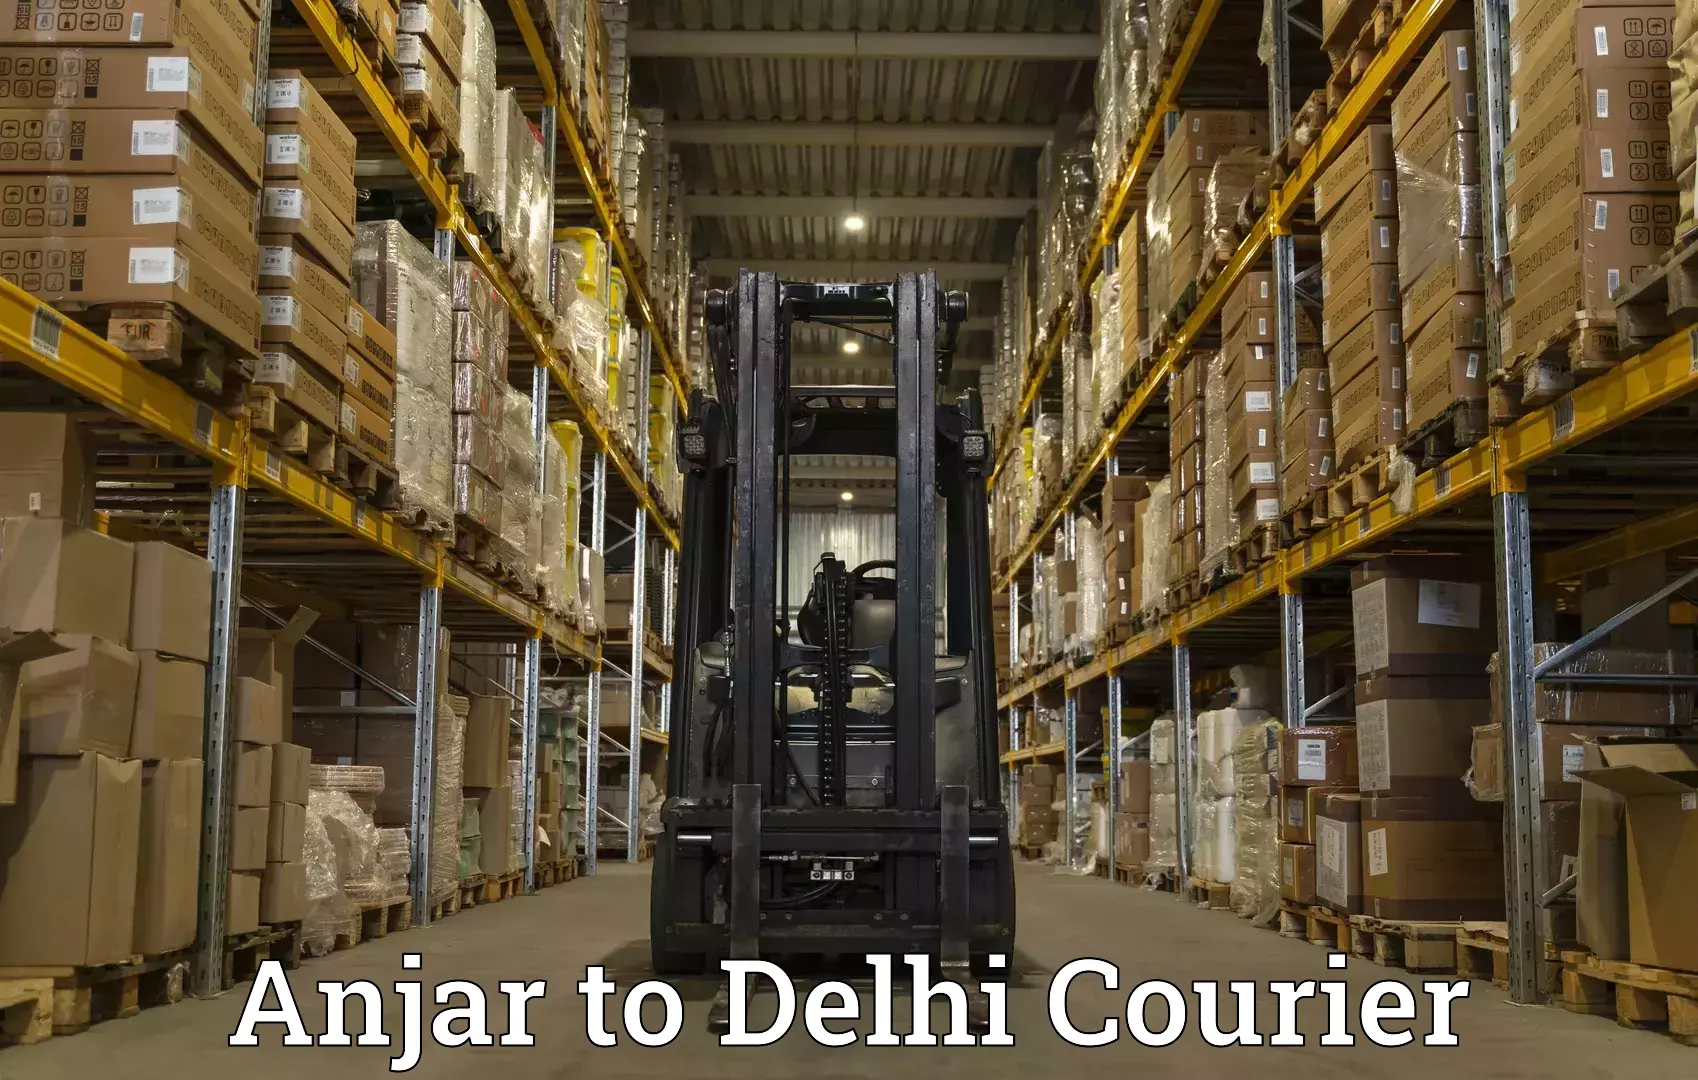 Courier service comparison Anjar to Ramesh Nagar